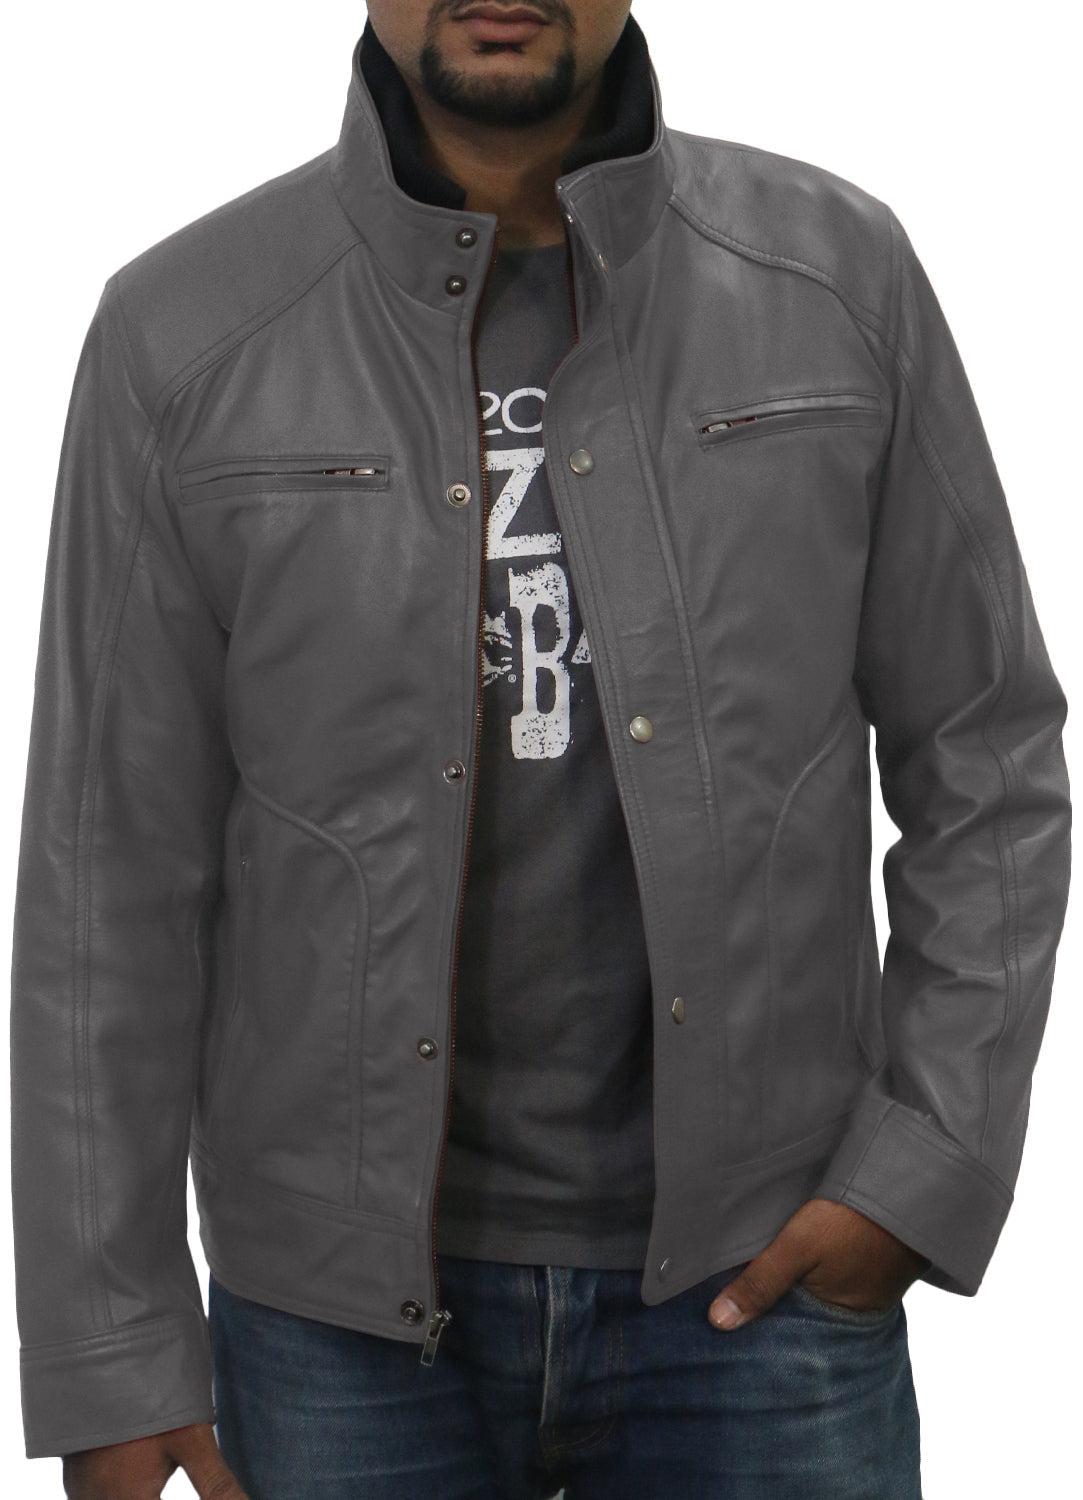 Leather Jackets Hub Mens Genuine Lambskin Leather Jacket (Black, Fencing Jacket) - 1501101